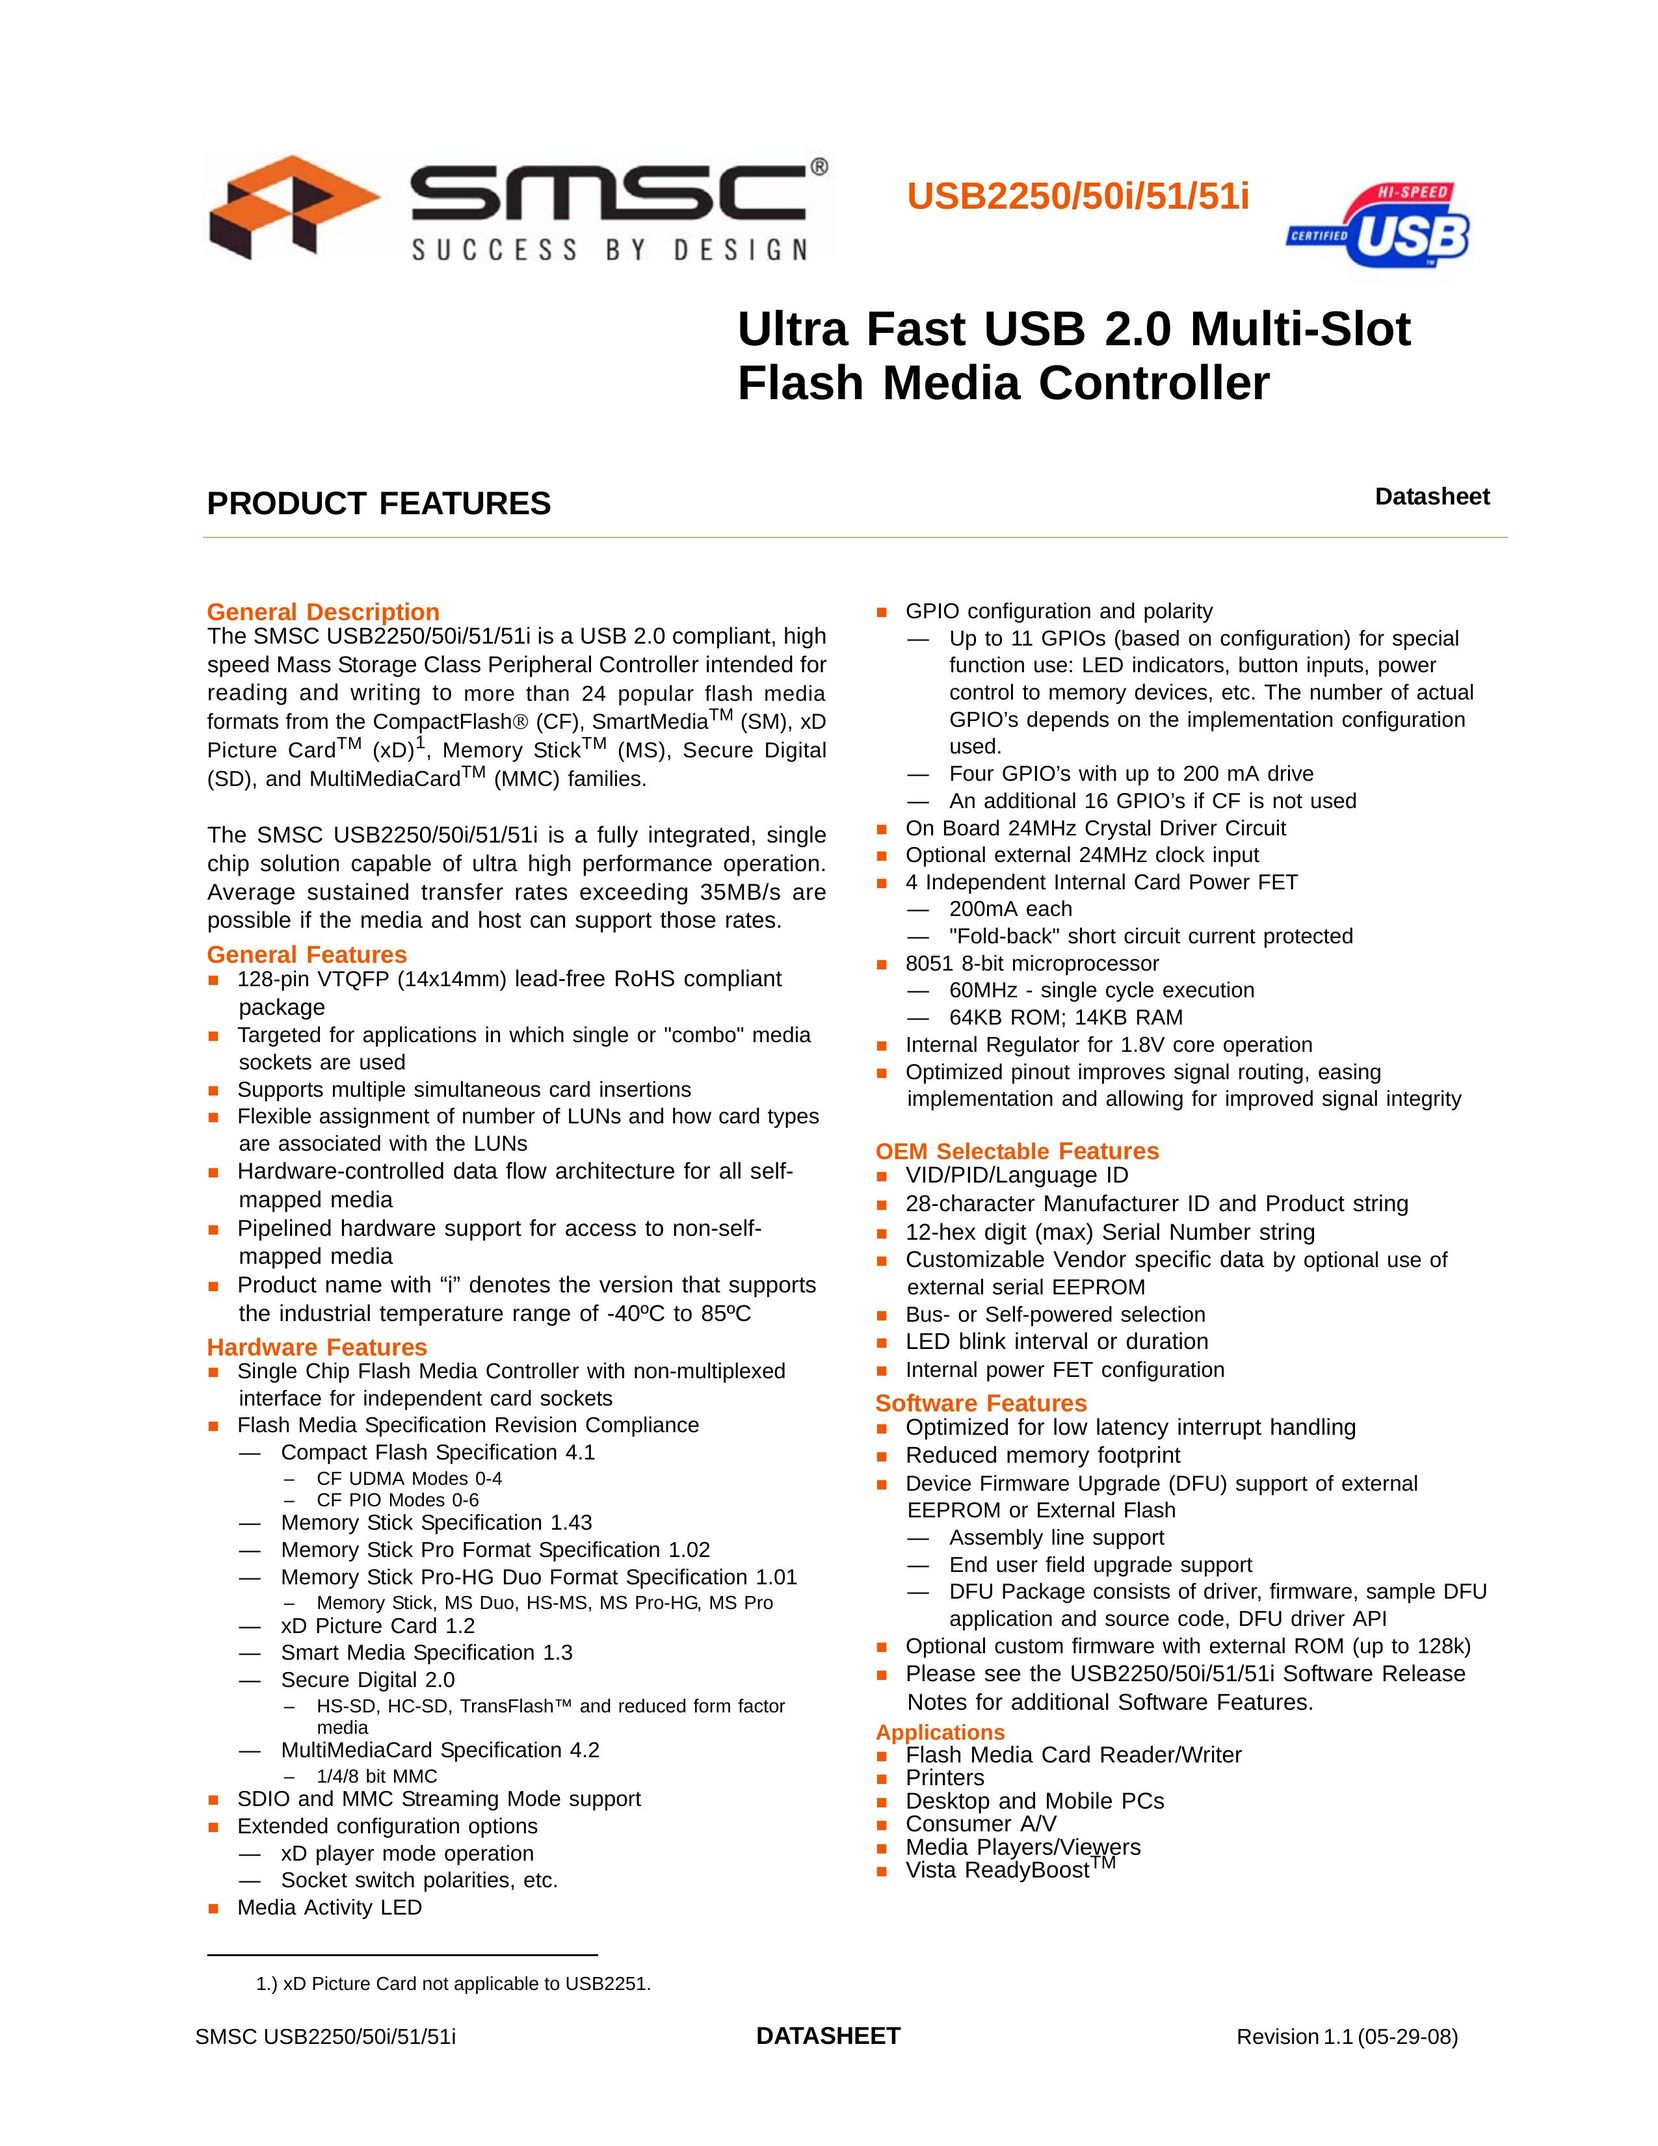 SMSC USB2251i Computer Drive User Manual